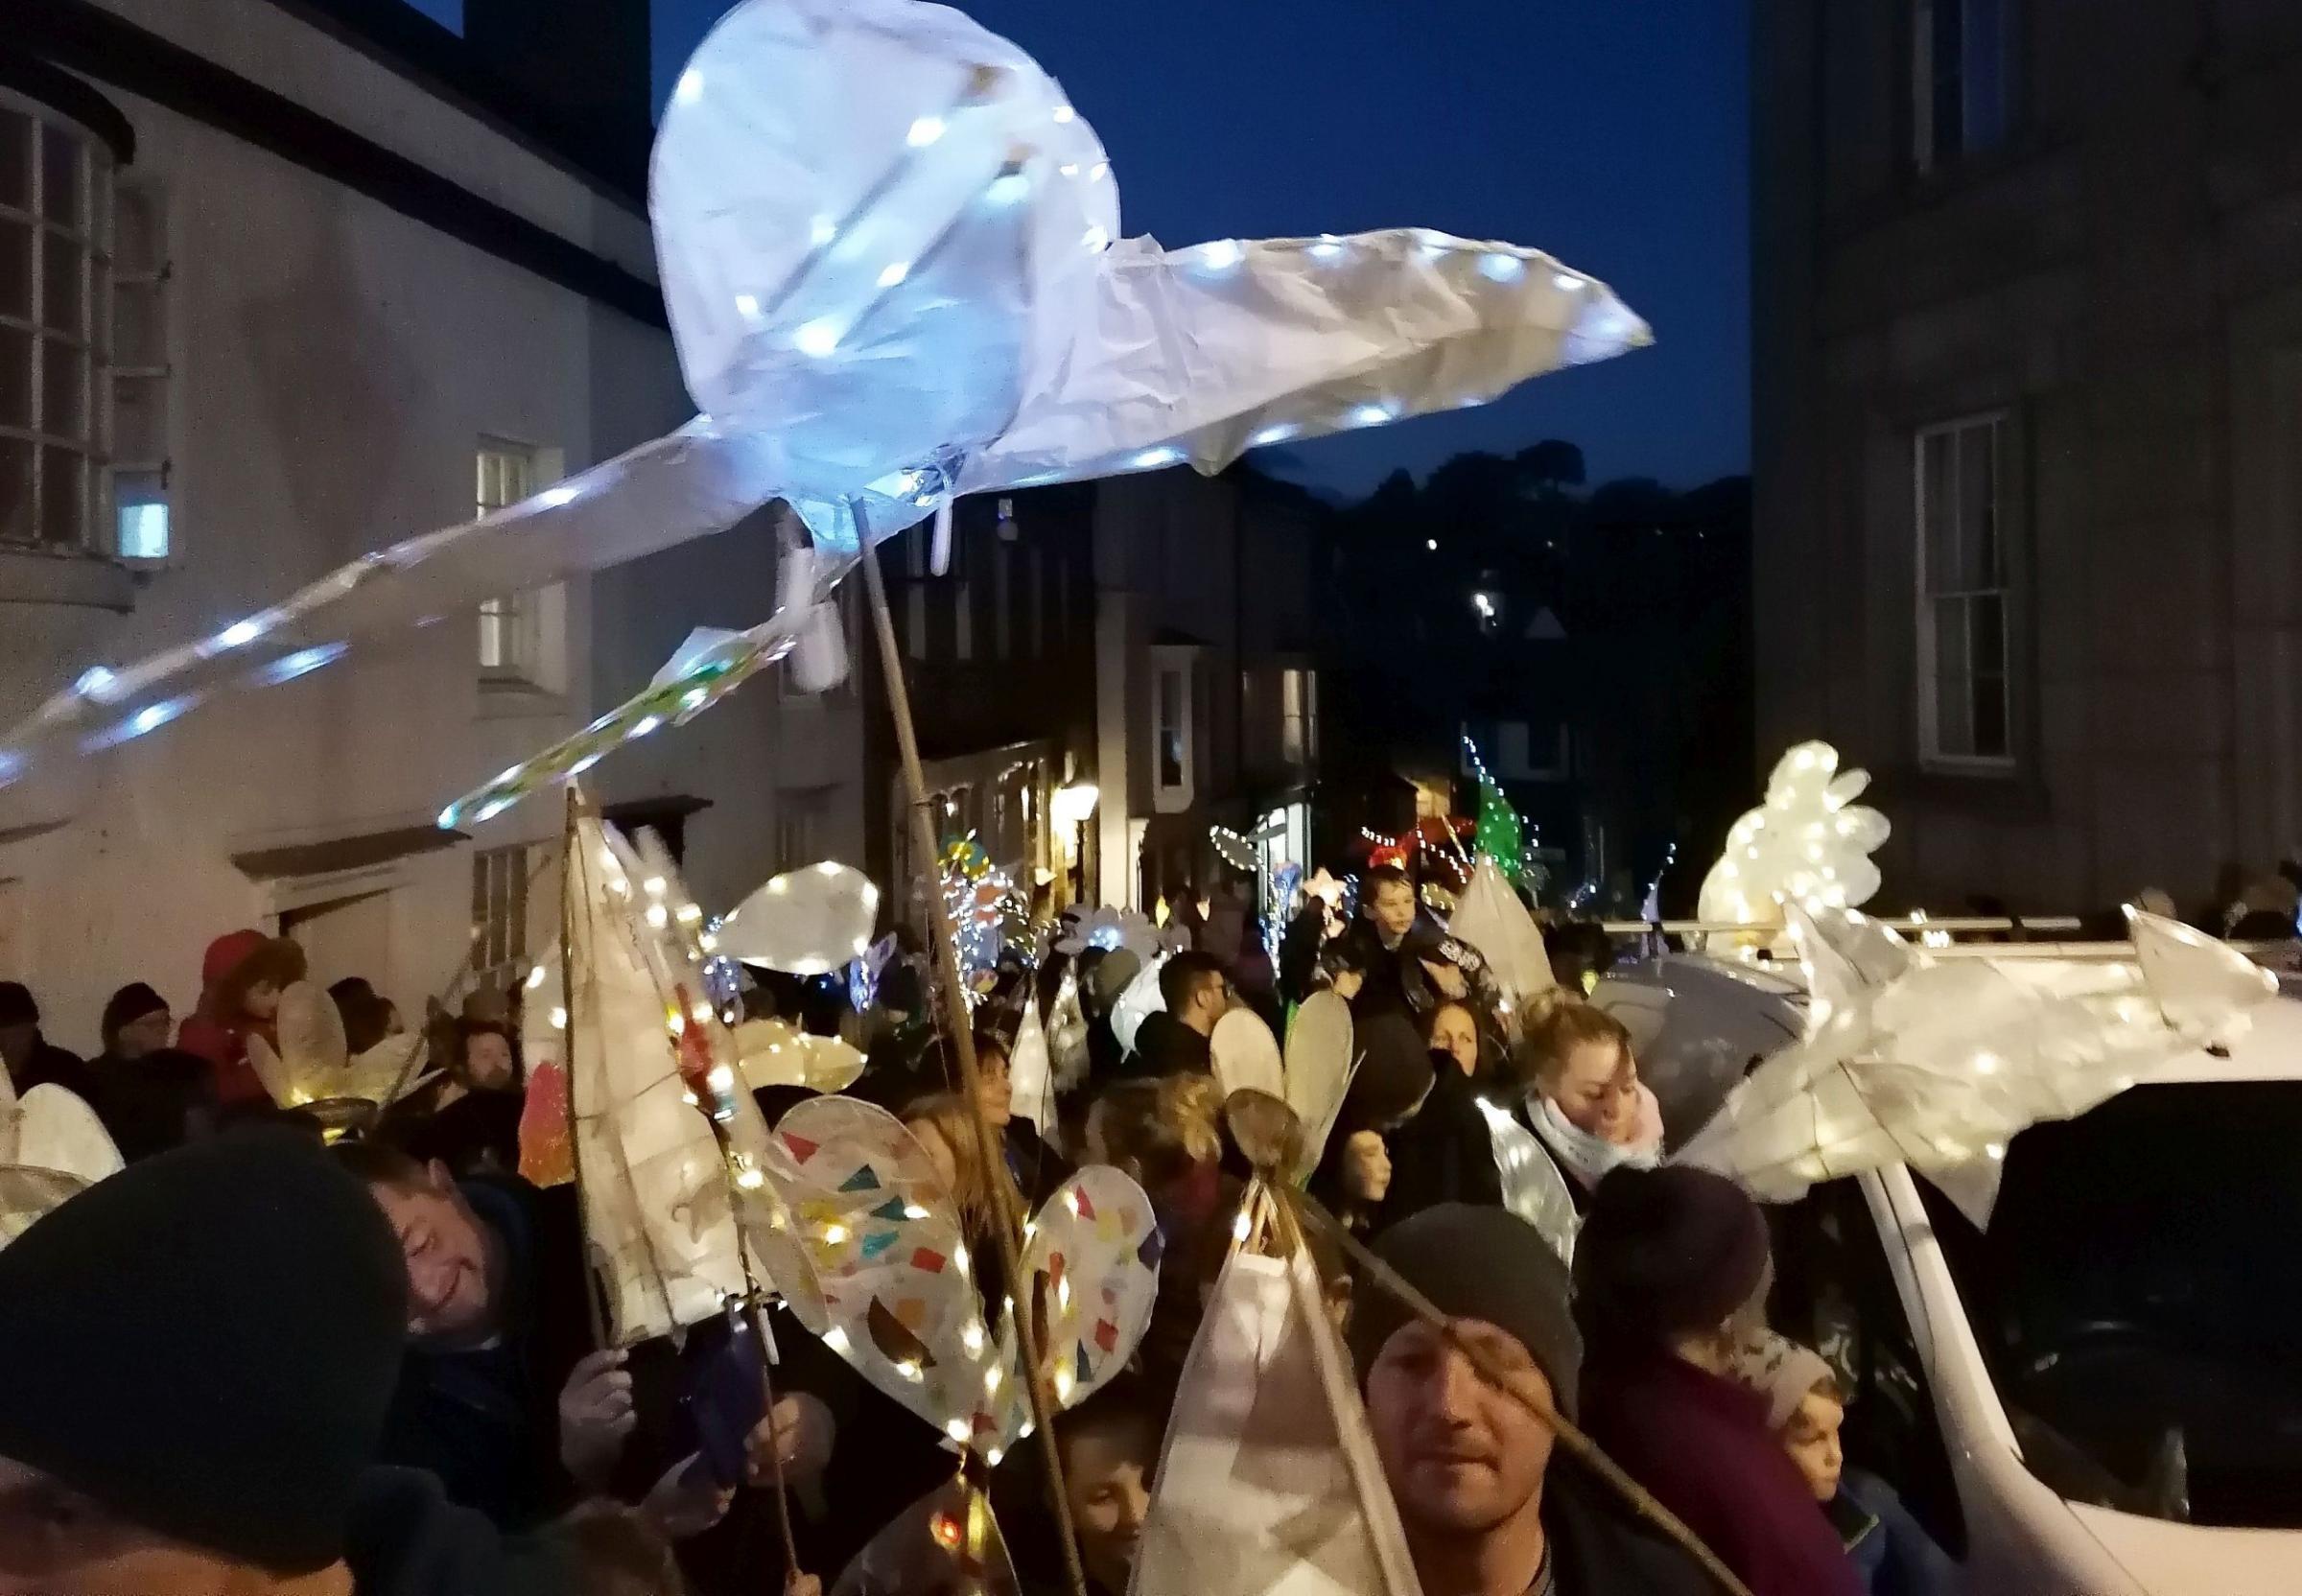 The lanterns lit up in Church Street